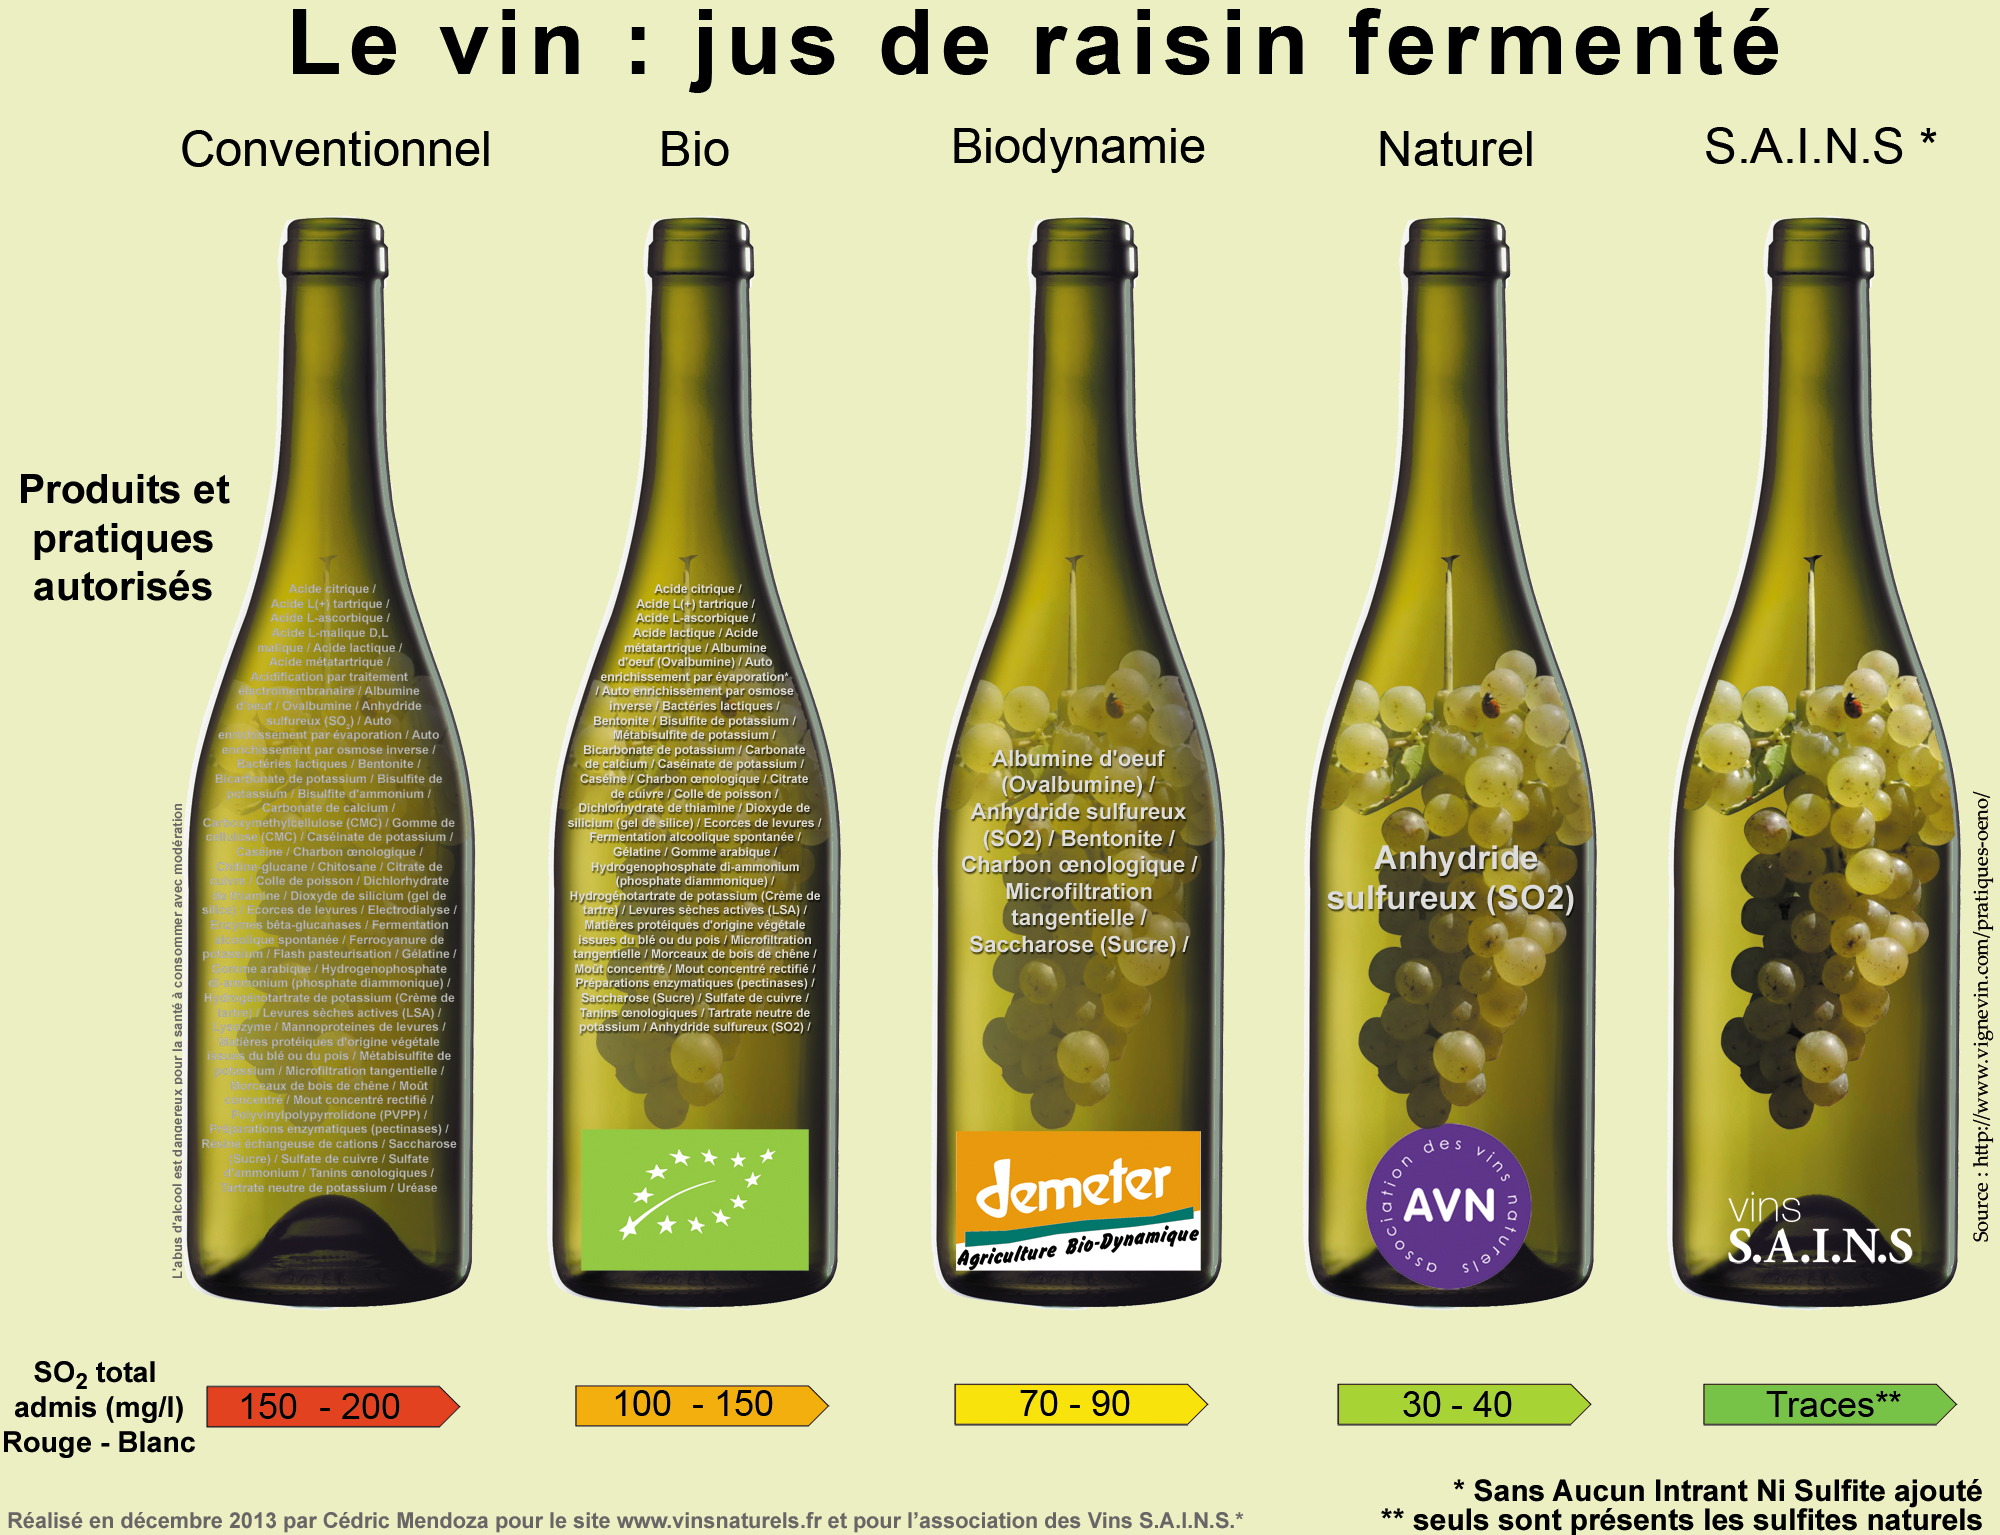 Certifications vins biologiques, biodynamie, vin nature, vin SAINS, vin bio 